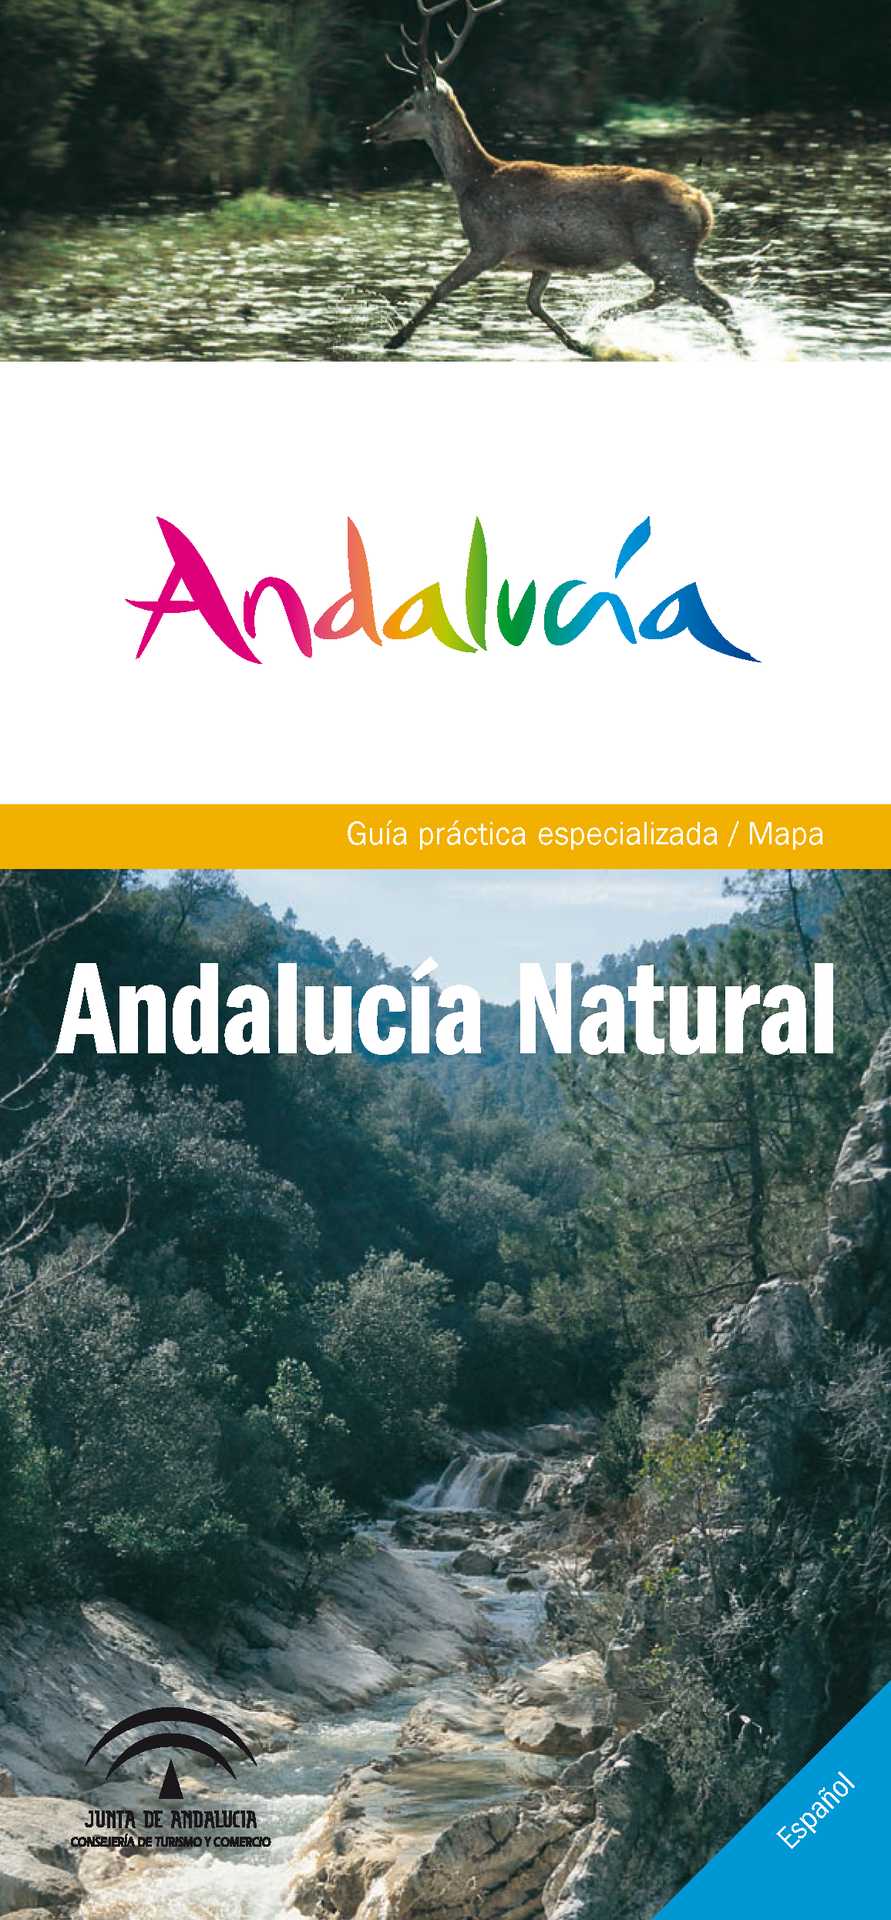 guia_practica_andalucia_natural.png 